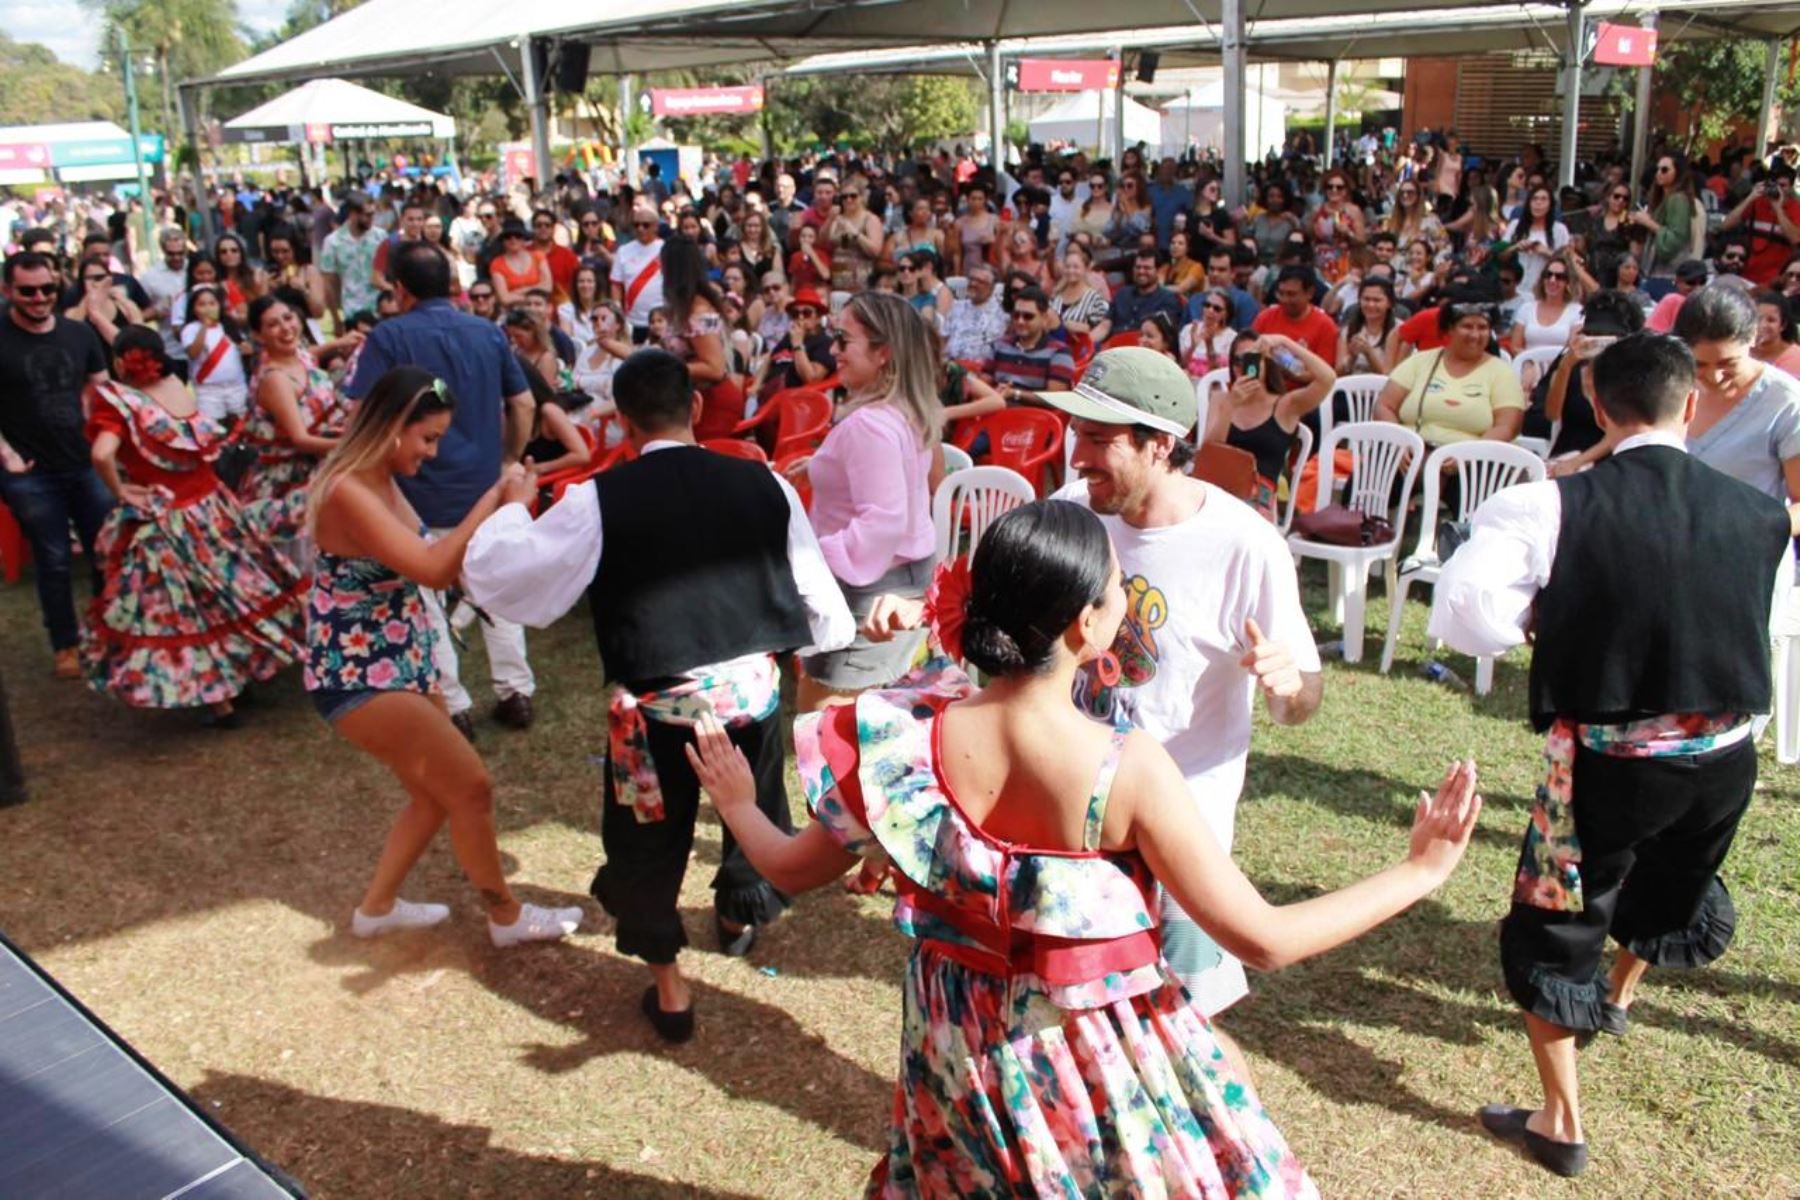 Festival Peruano en Brasil congregó a más de 13,000 personas. Foto: ANDINA/Difusión.